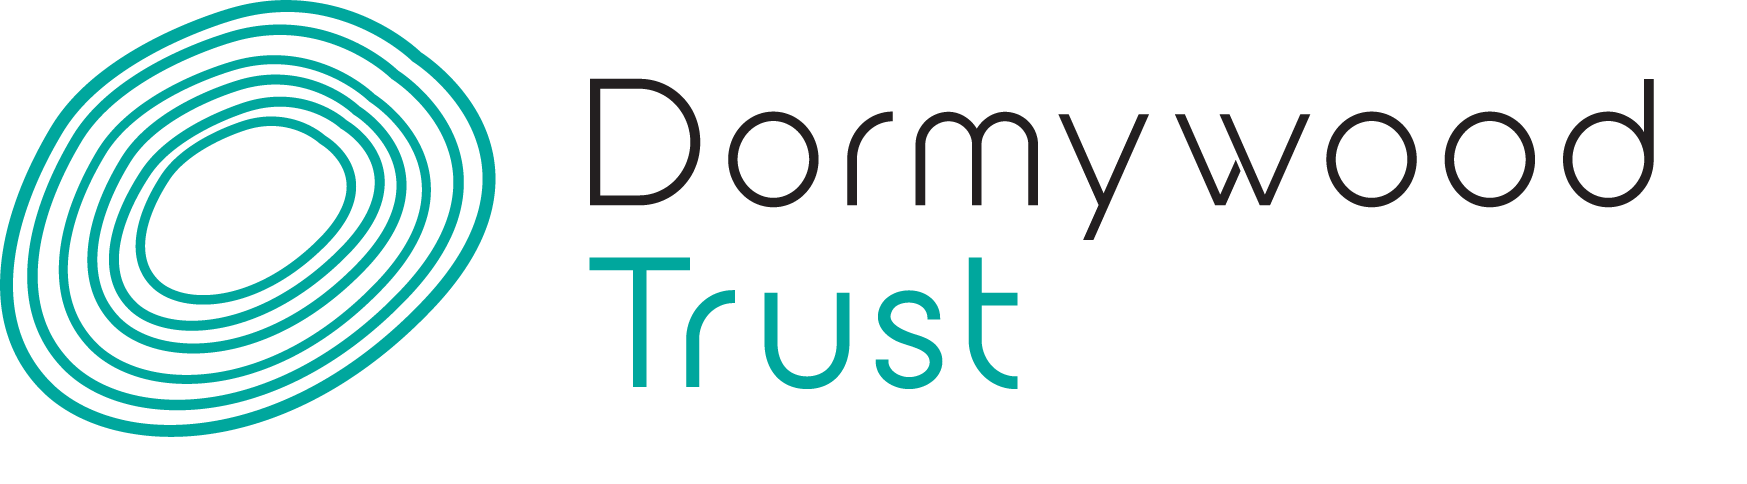 Dormywood trust